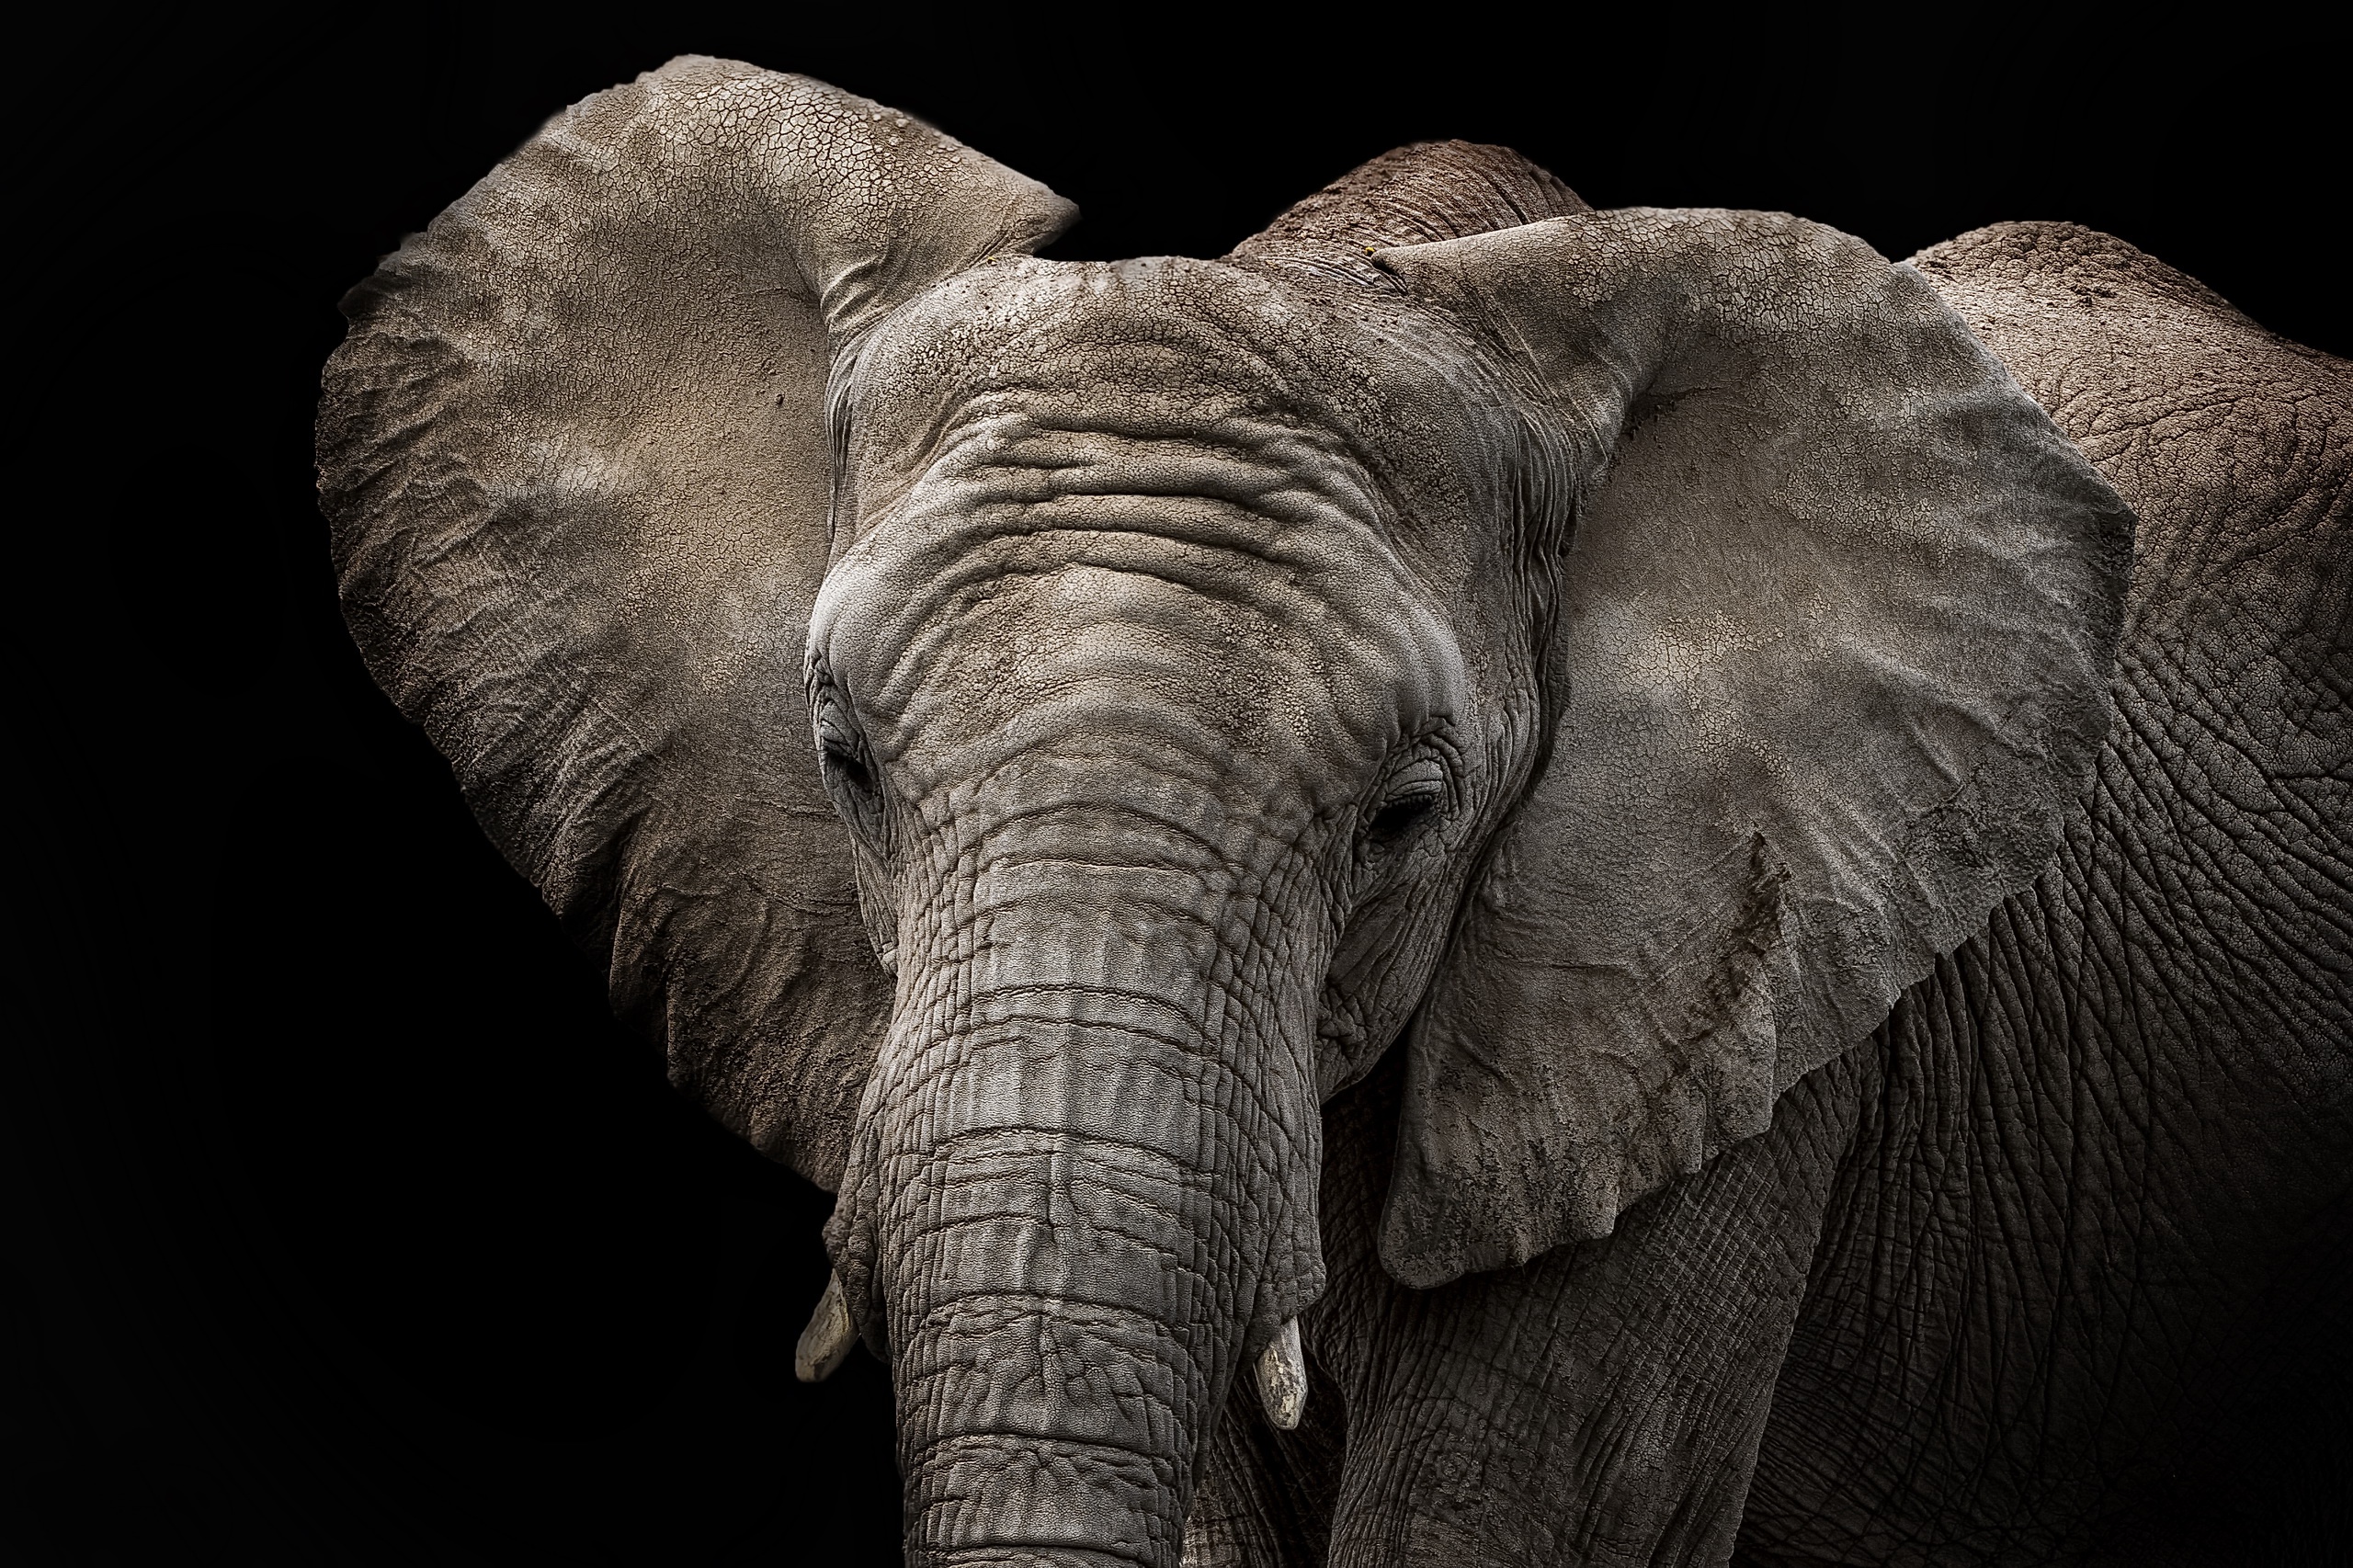 General 2560x1706 animals elephant black background closeup simple background